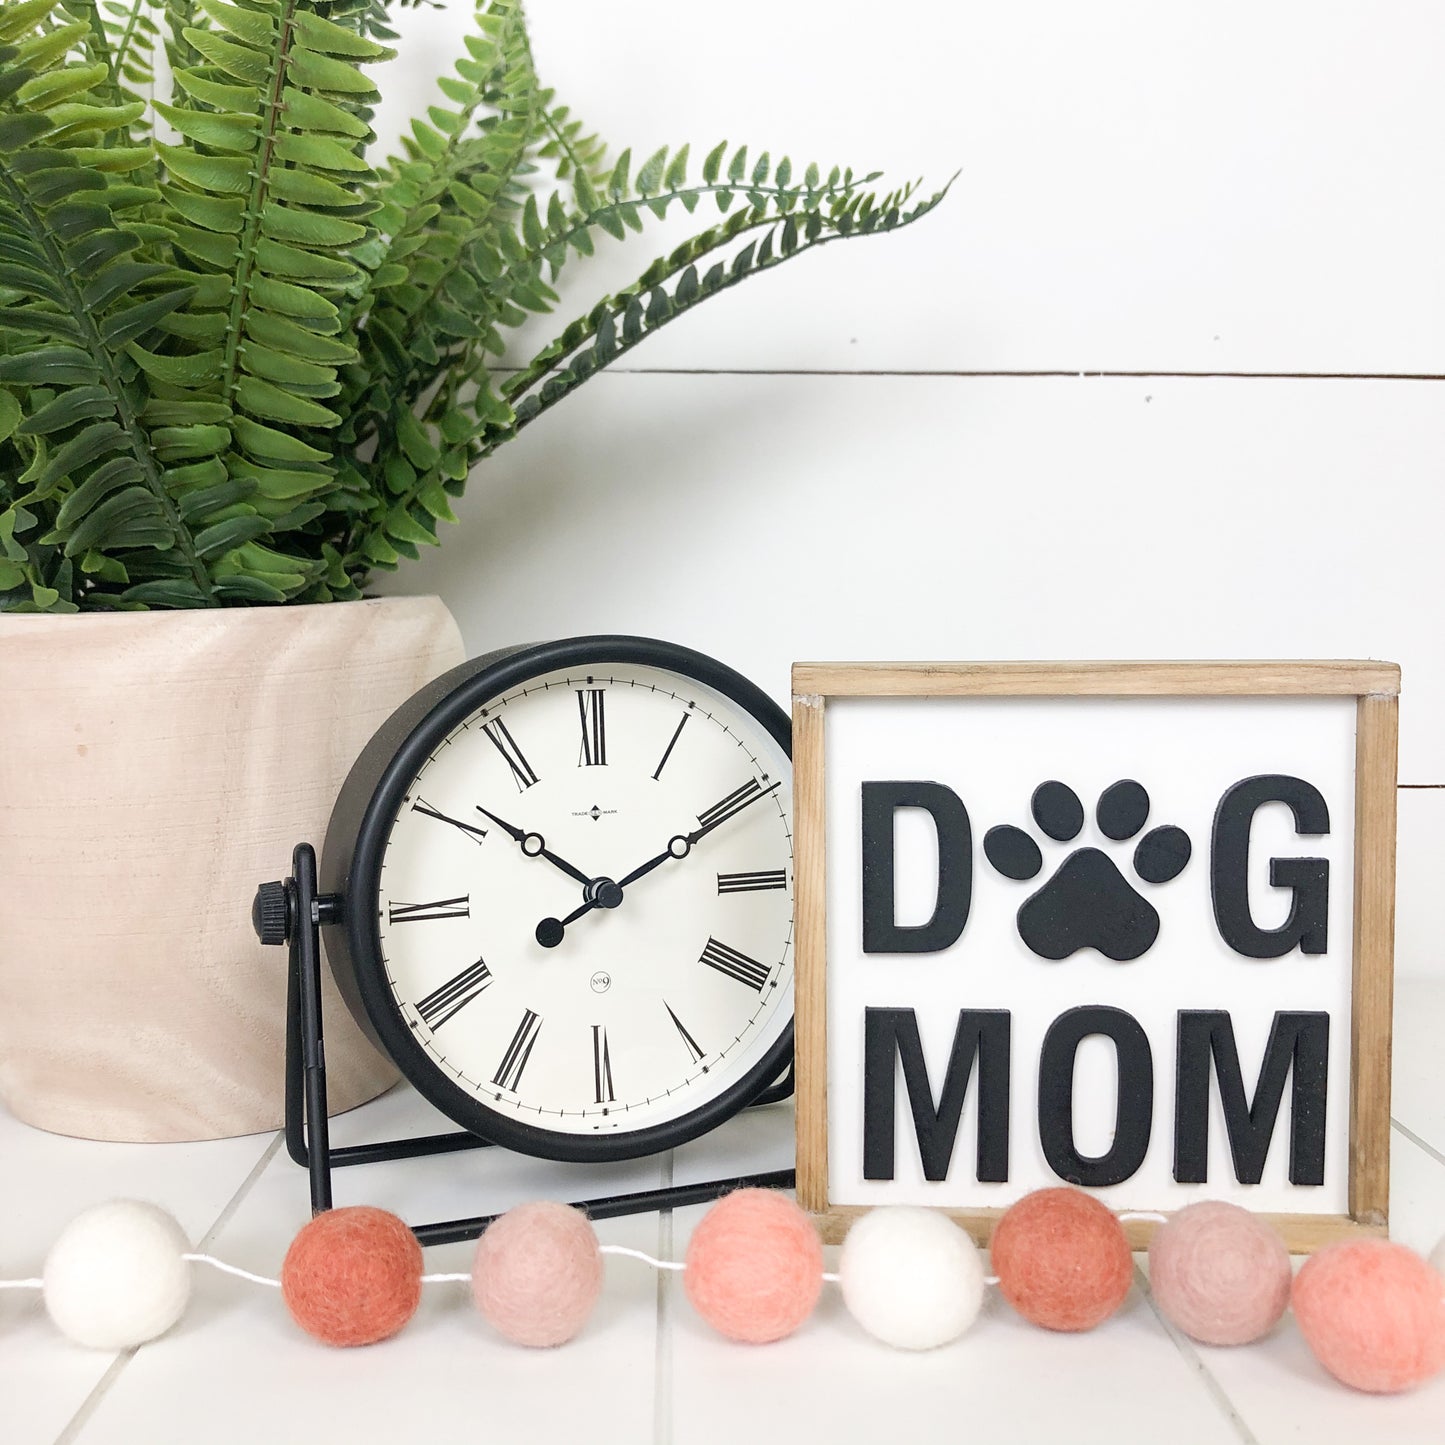 Dog Mom | 5x5 inch Wood Framed Sign